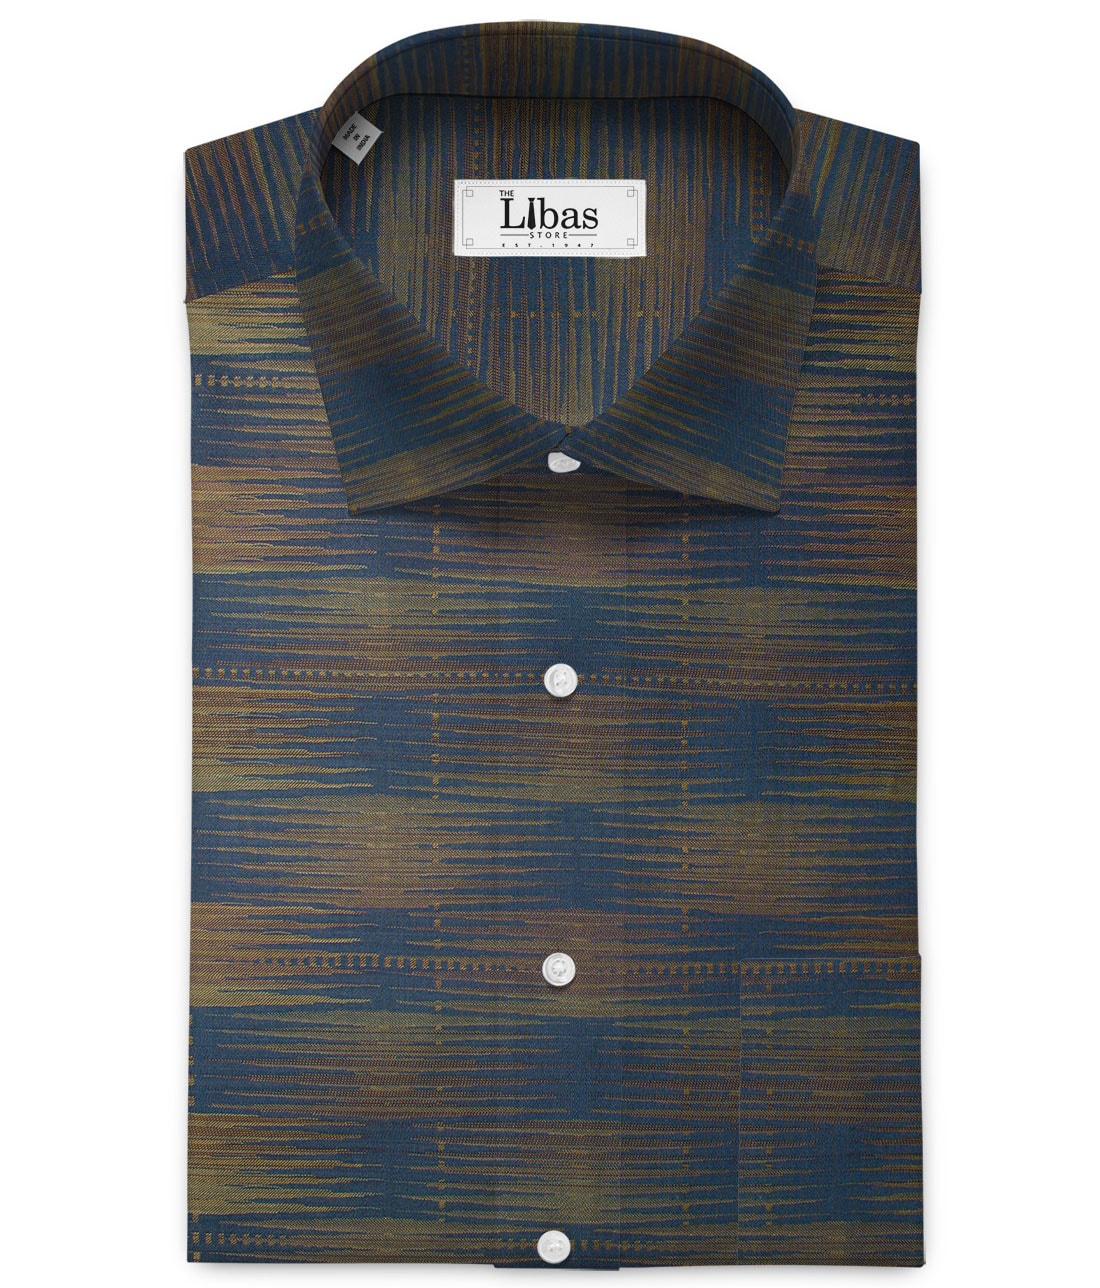 Soktas Men's Giza Cotton Self Design 2.25 Meter Unstitched Shirting Fabric (Light Brown & Blue)